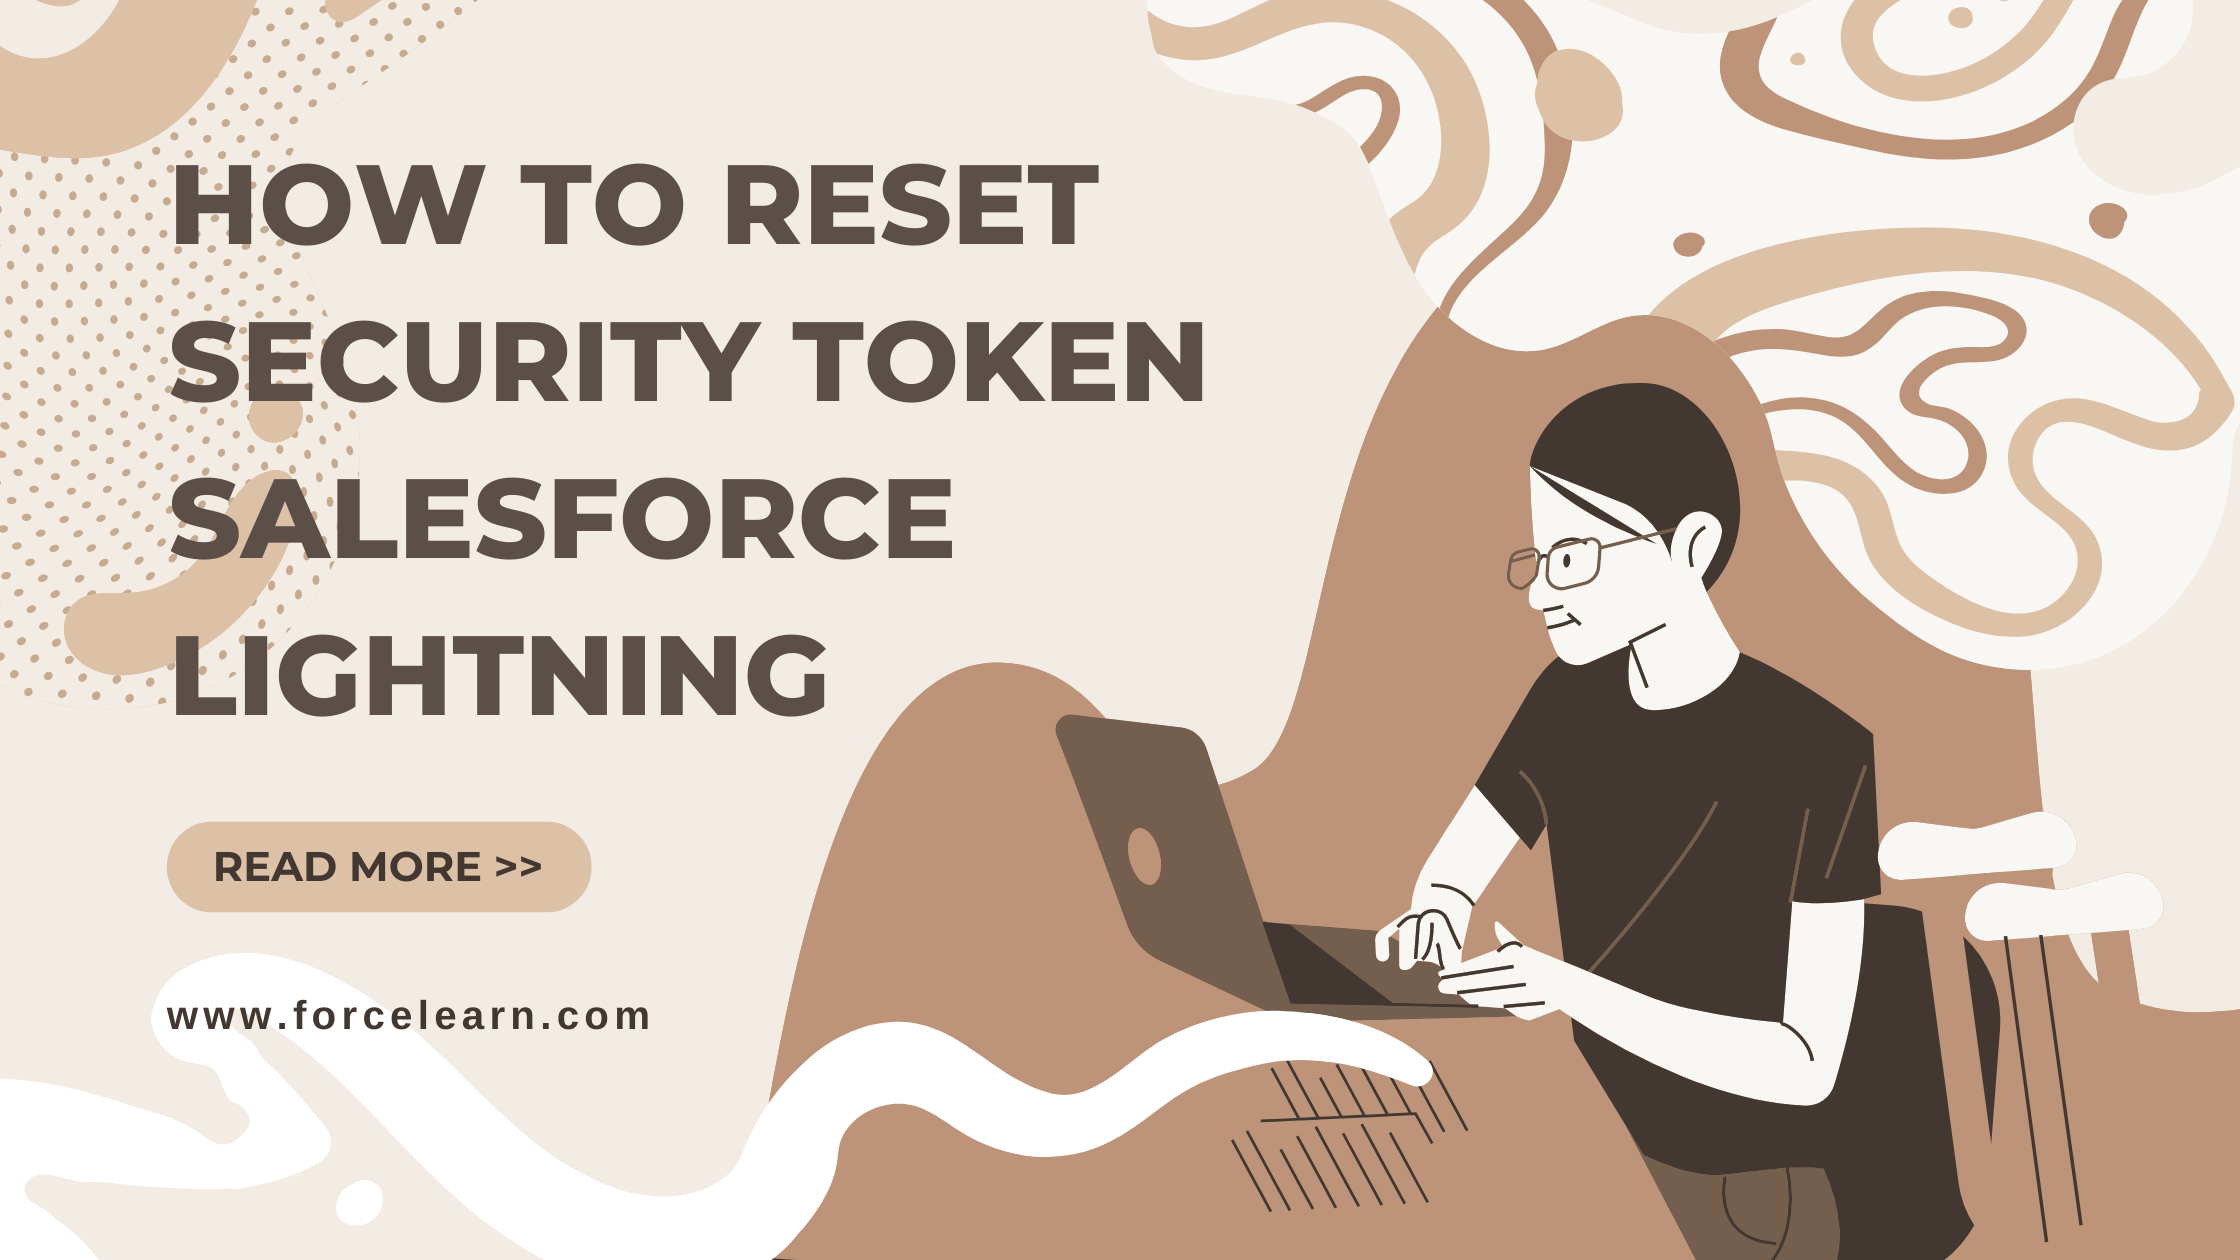 How to reset security token salesforce lightning